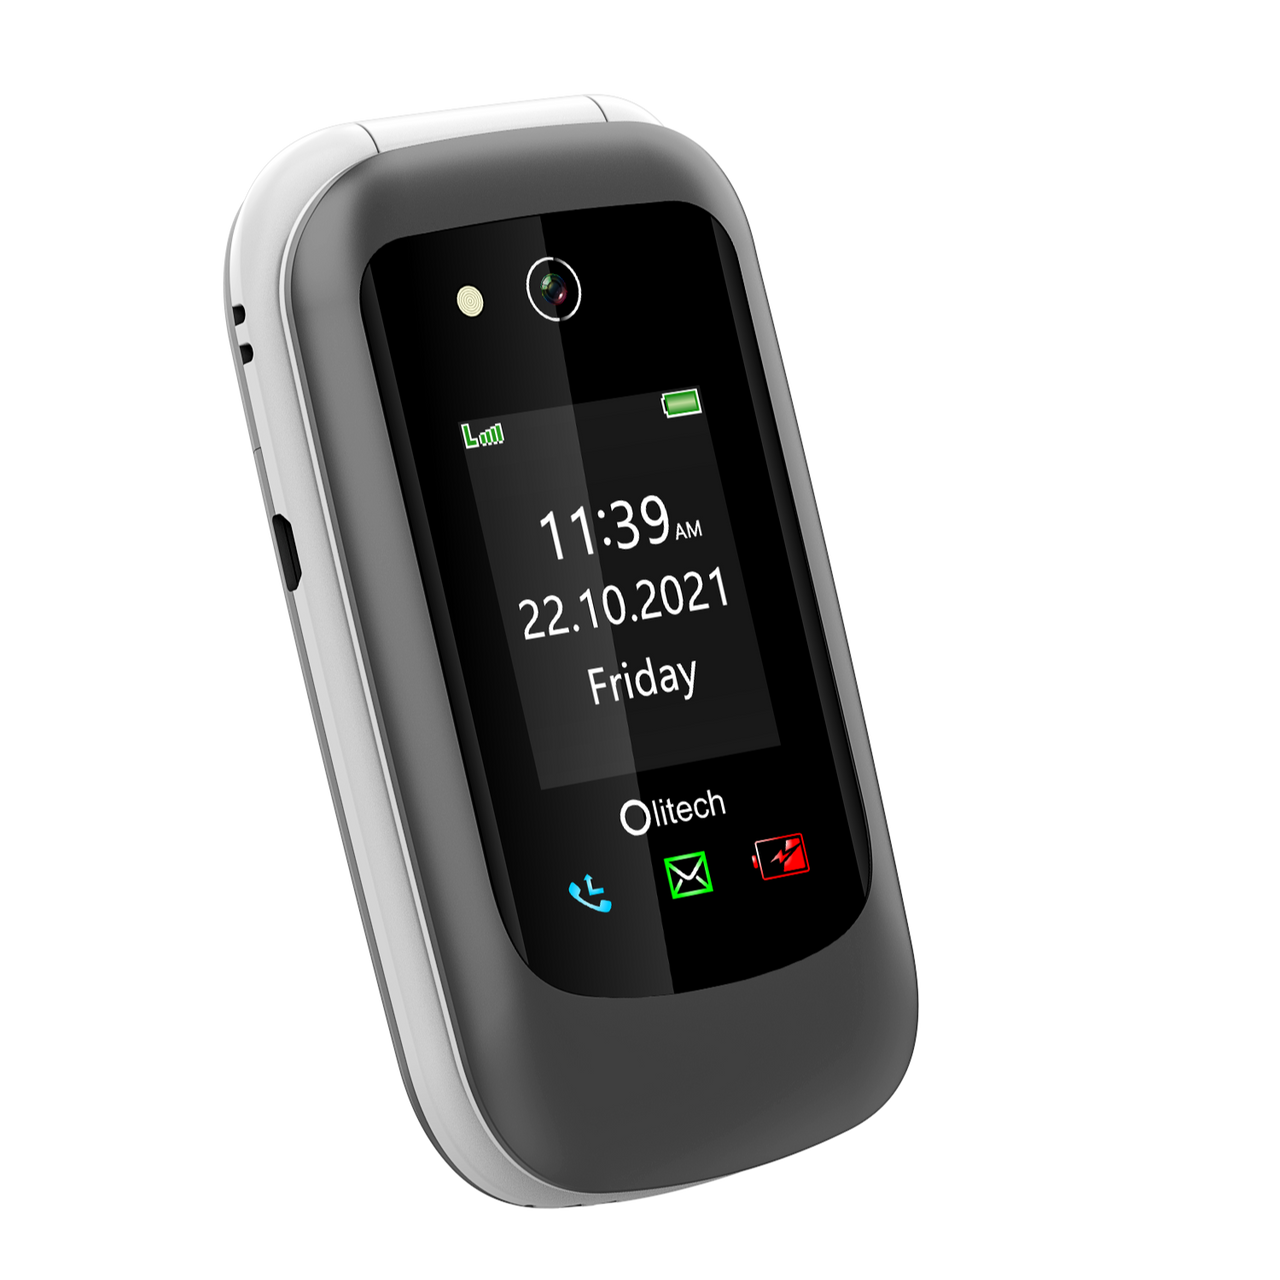 Olitech Easy Flip2 4G Seniors Phone Big Buttons GPS Location - Black/White